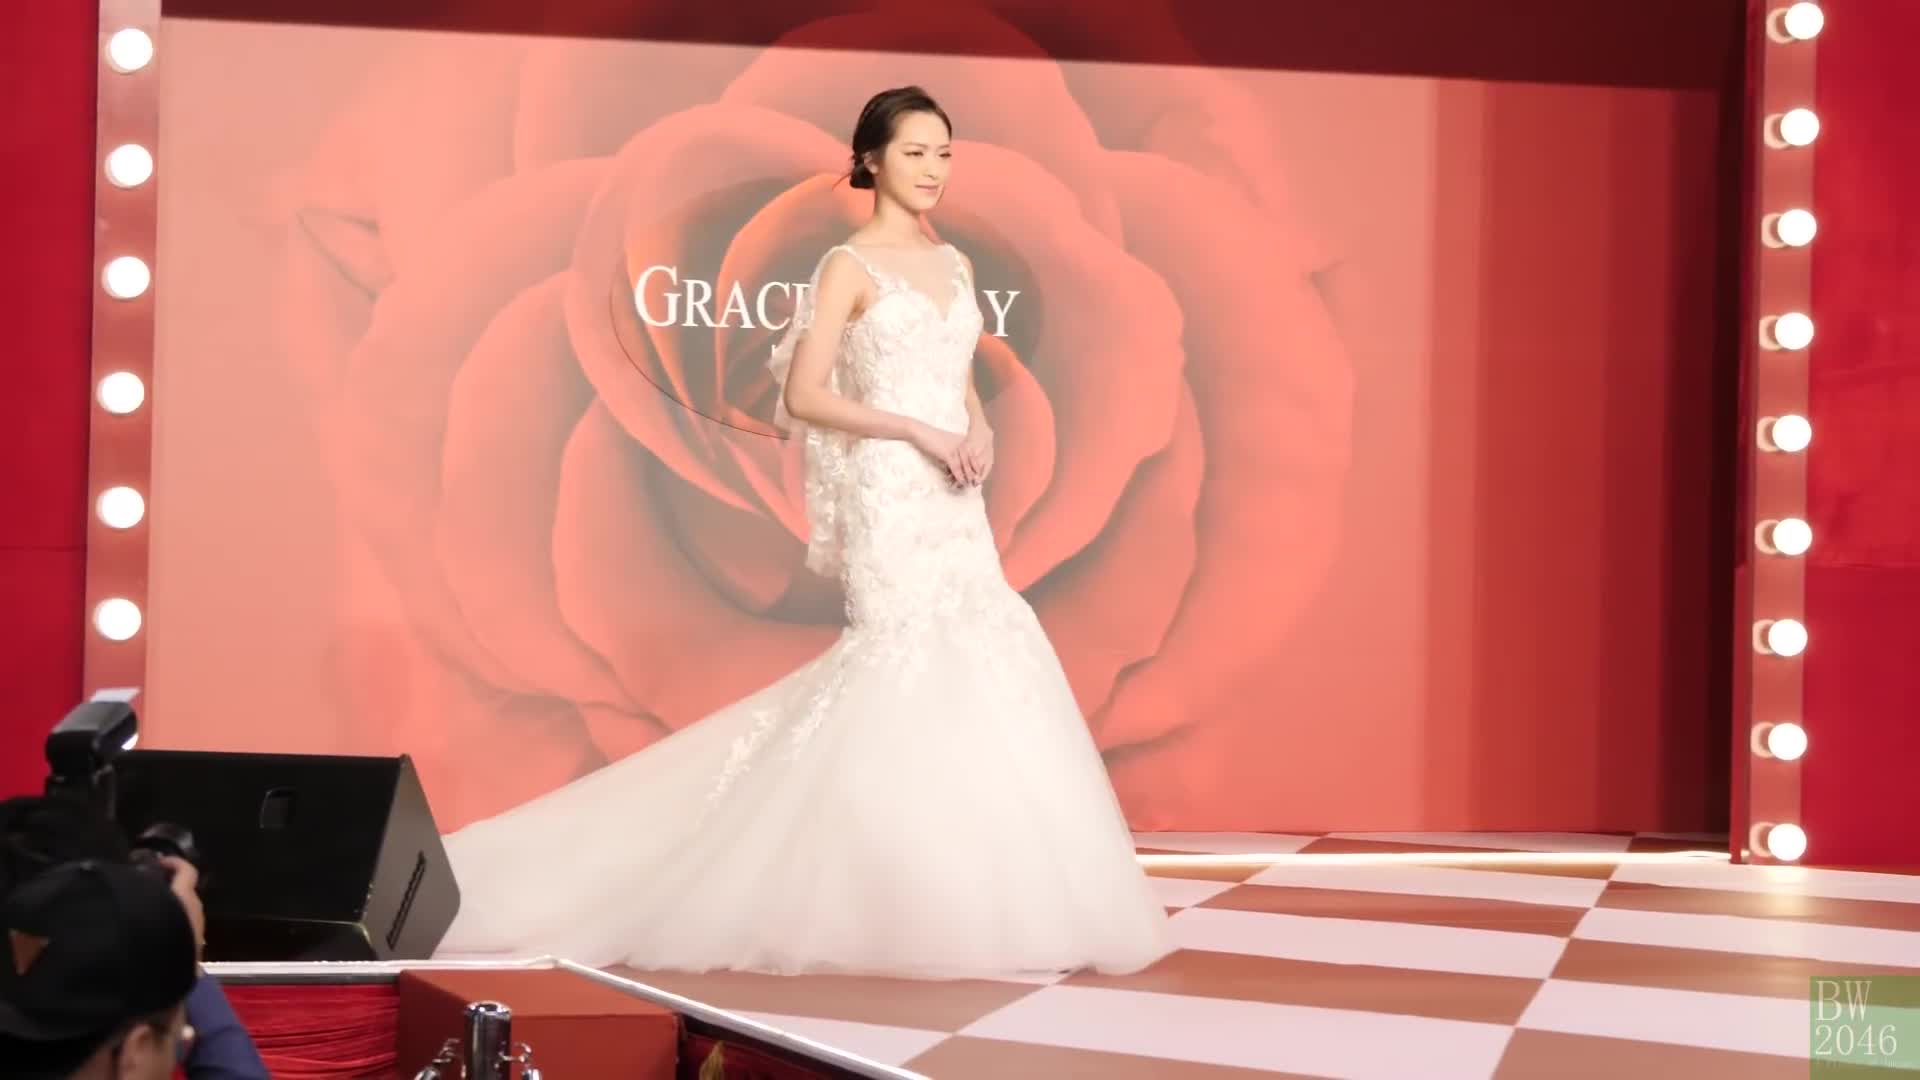 馮盈盈 Crystal Fung - Grace Kelly Korea 01 @ 婚紗展